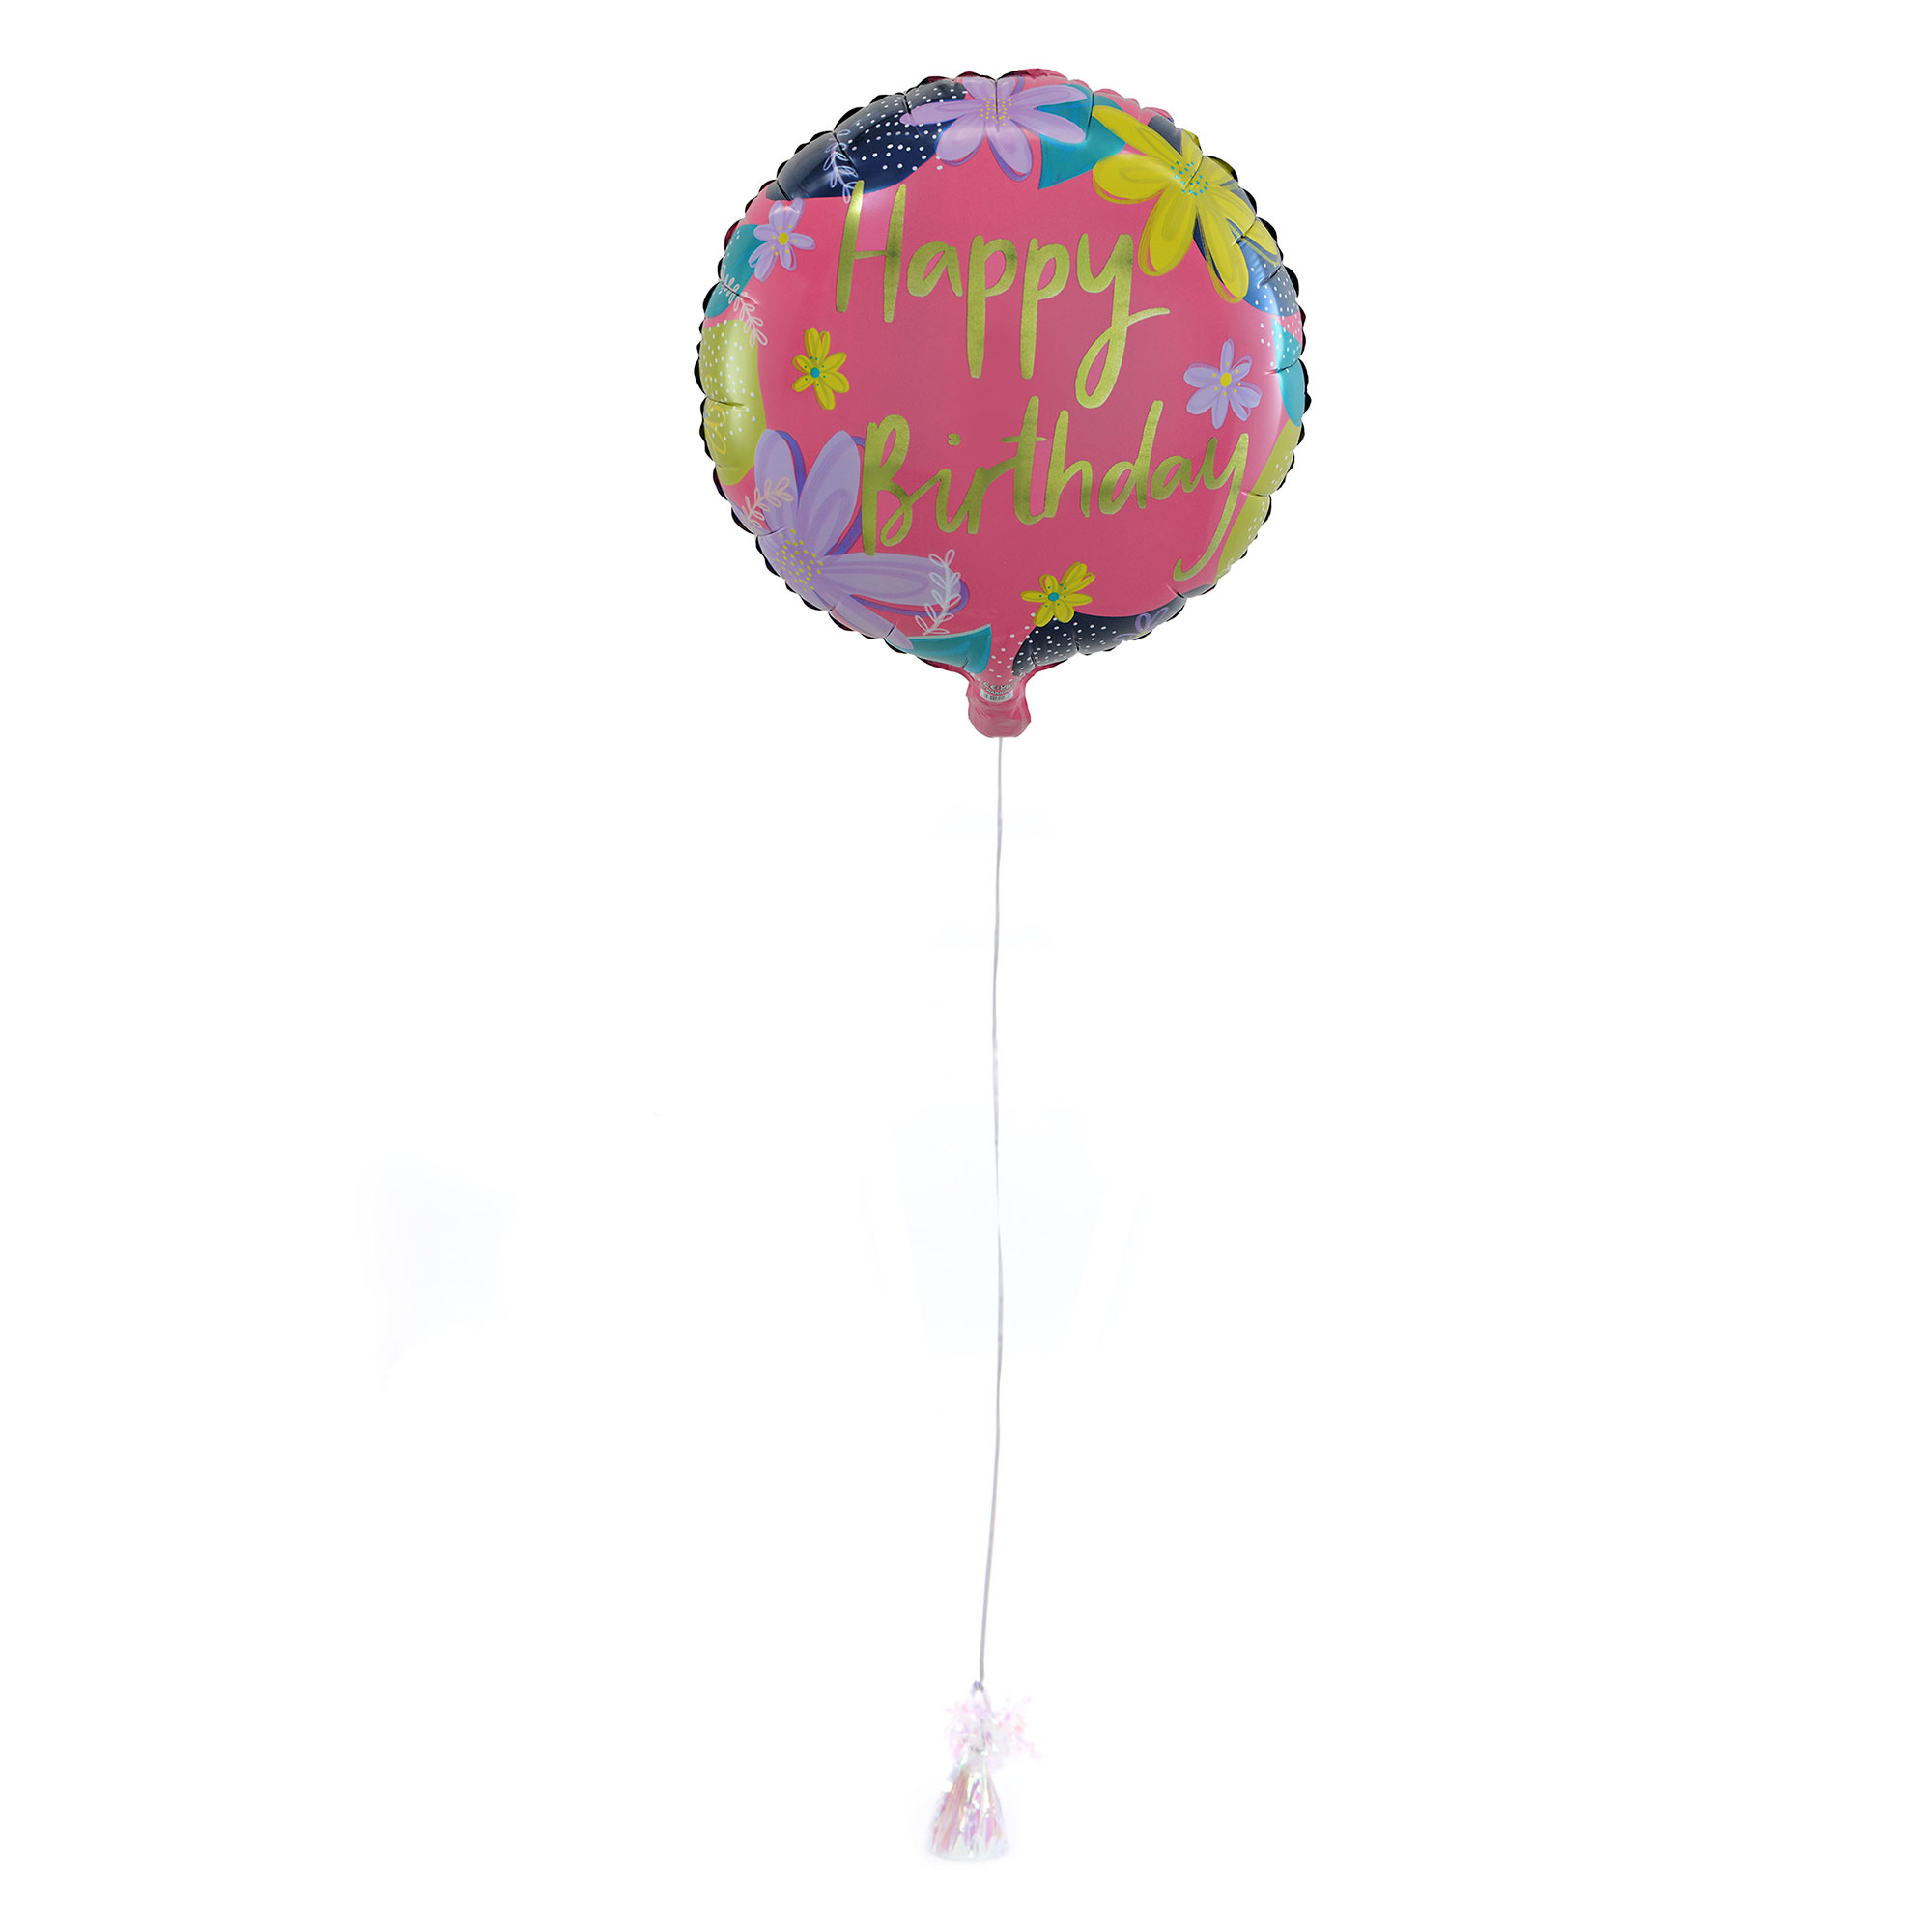 Floral Happy Birthday Birthday Balloon & Lindt Chocolates - FREE GIFT CARD!